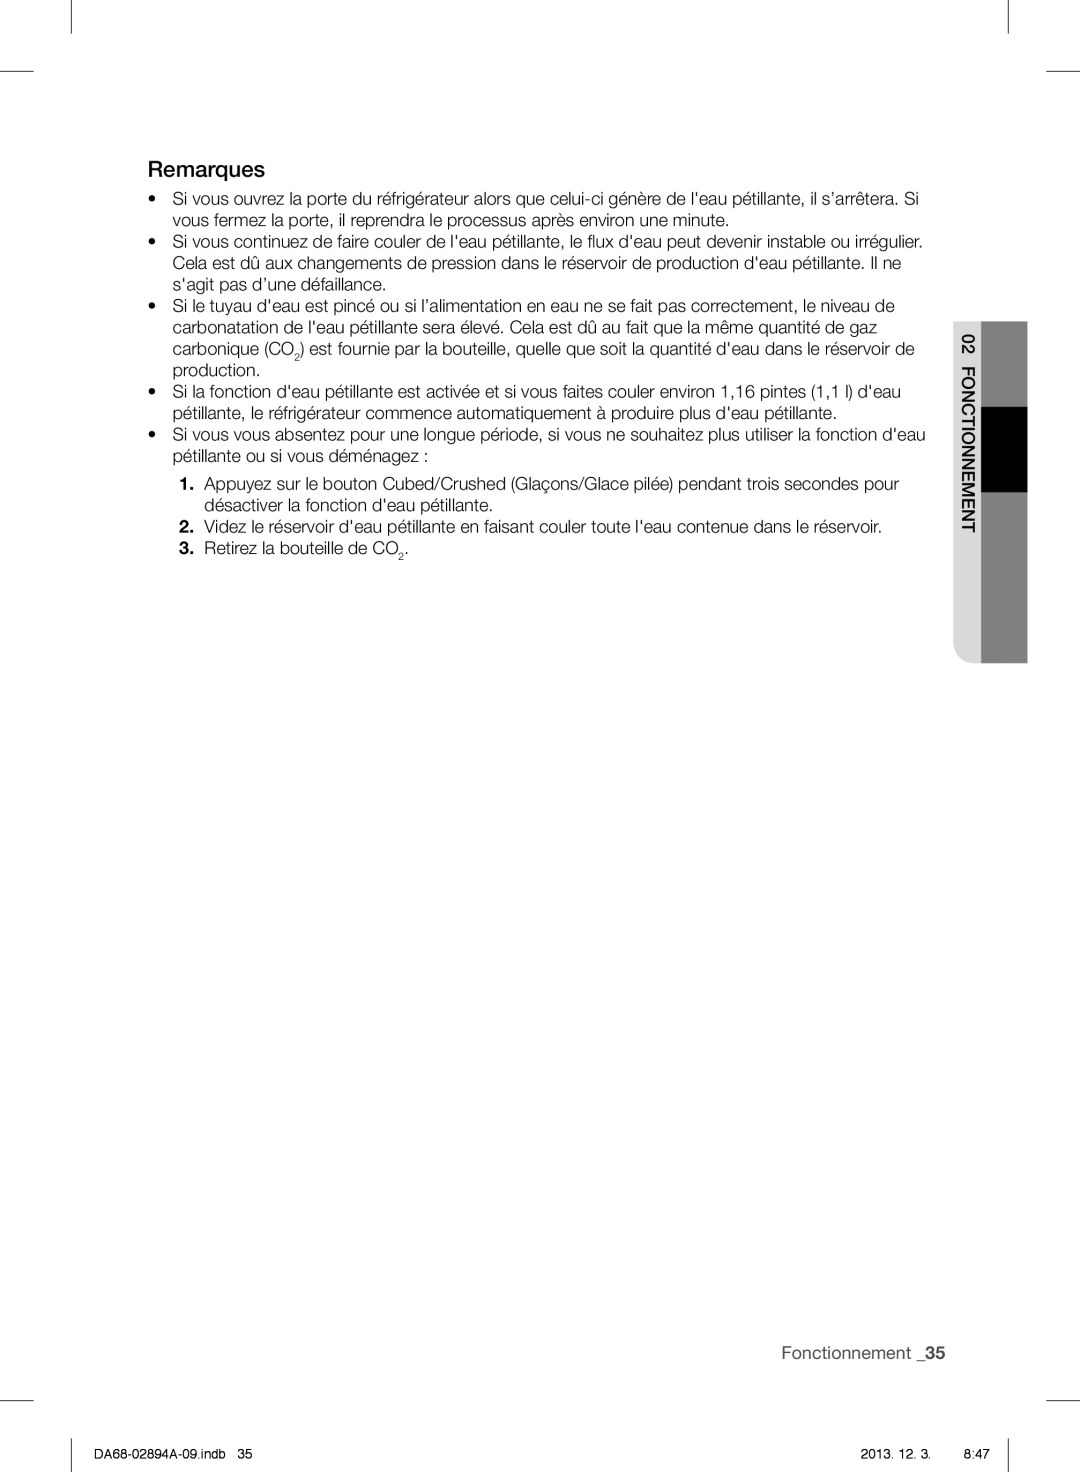 Samsung RF31FMESBSR, RF31FMEDBSR, RF31FMEDBBC user manual Remarques, Fonctionnement 